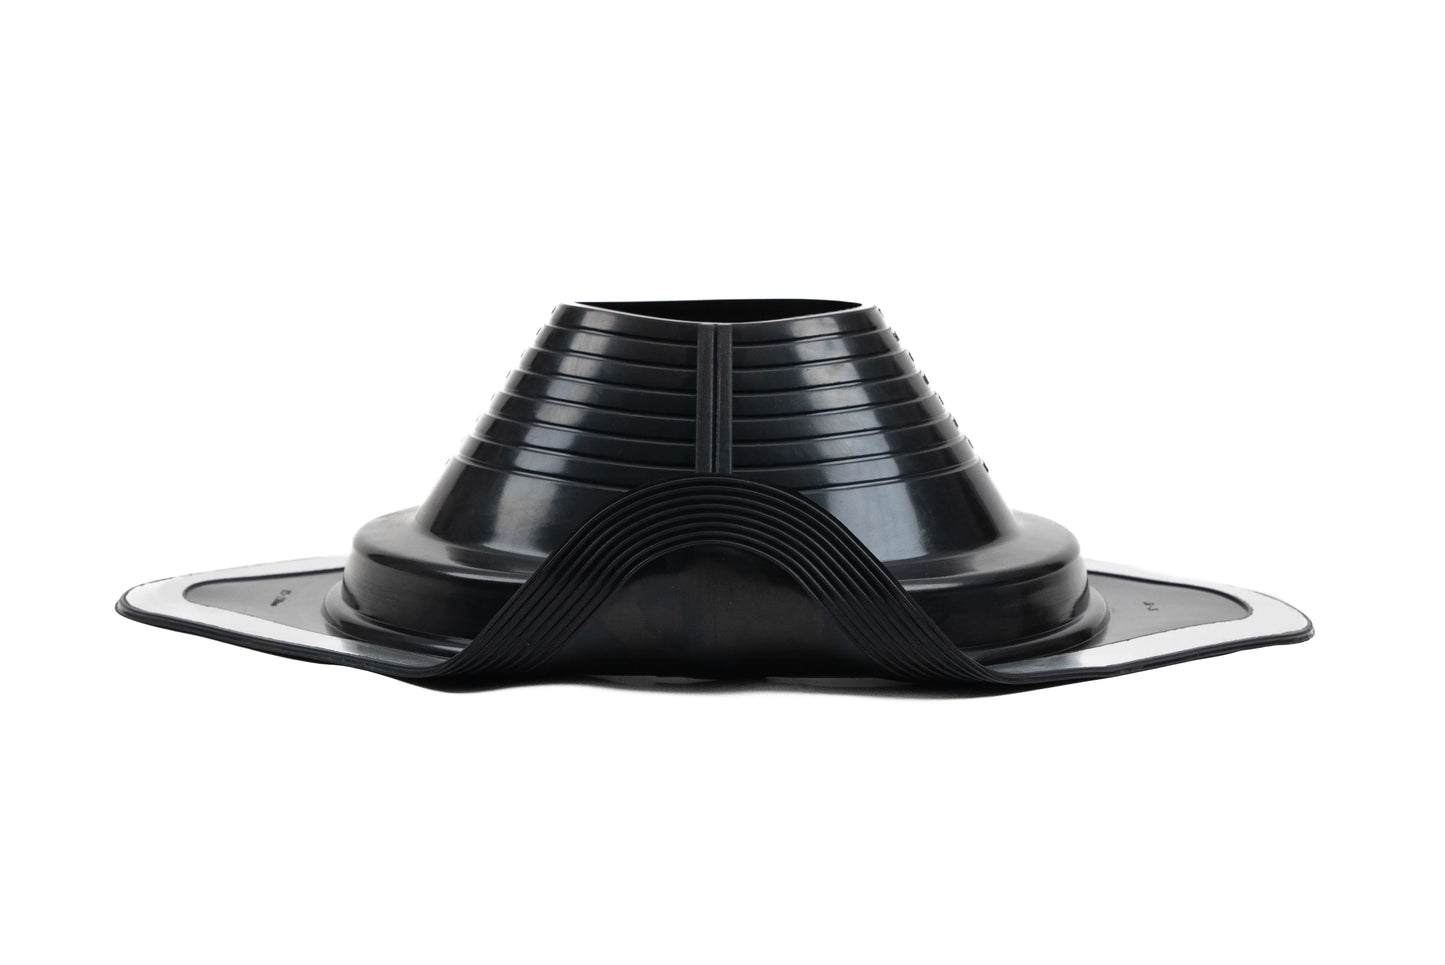 Dektite Combo Rubber Roof Flashing 125 - 230mm Black EPDM (DC106BC)